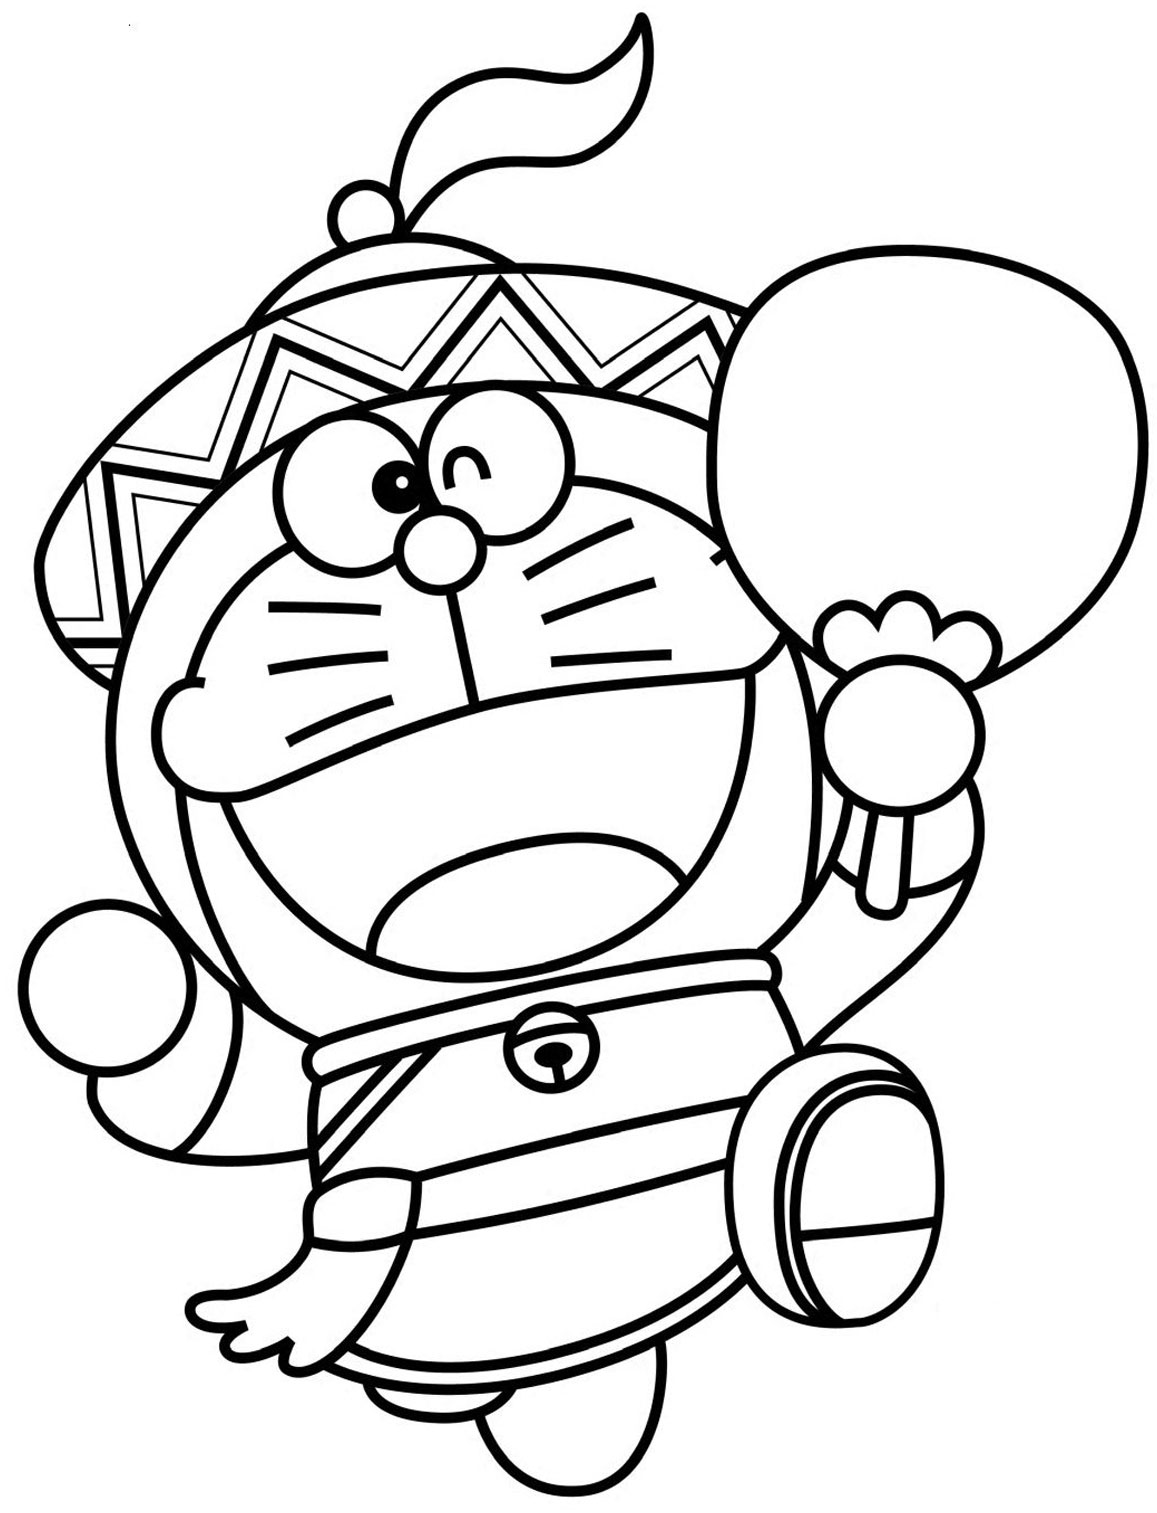 √Kumpulan Gambar Mewarnai Doraemon Yang Banyak dan Bagus ...